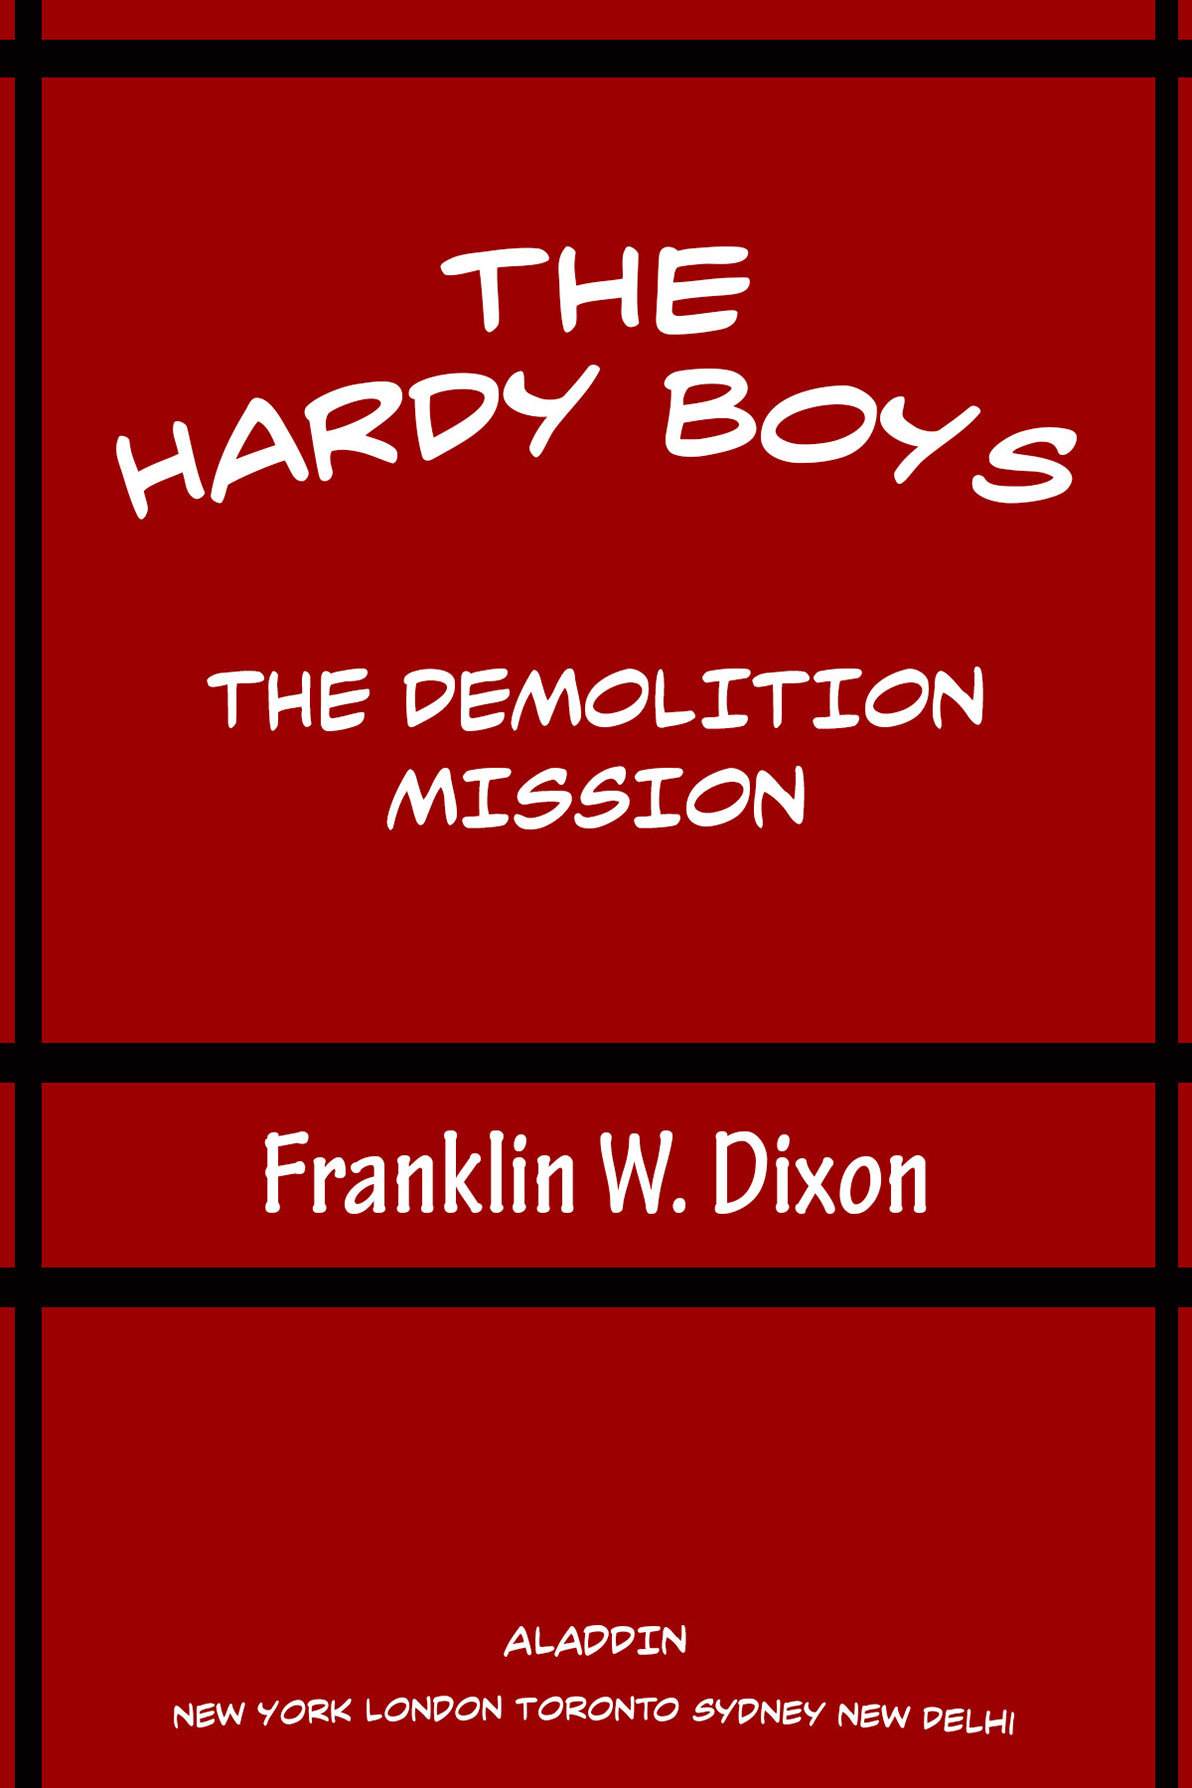 The Demolition Mission by Franklin W. Dixon